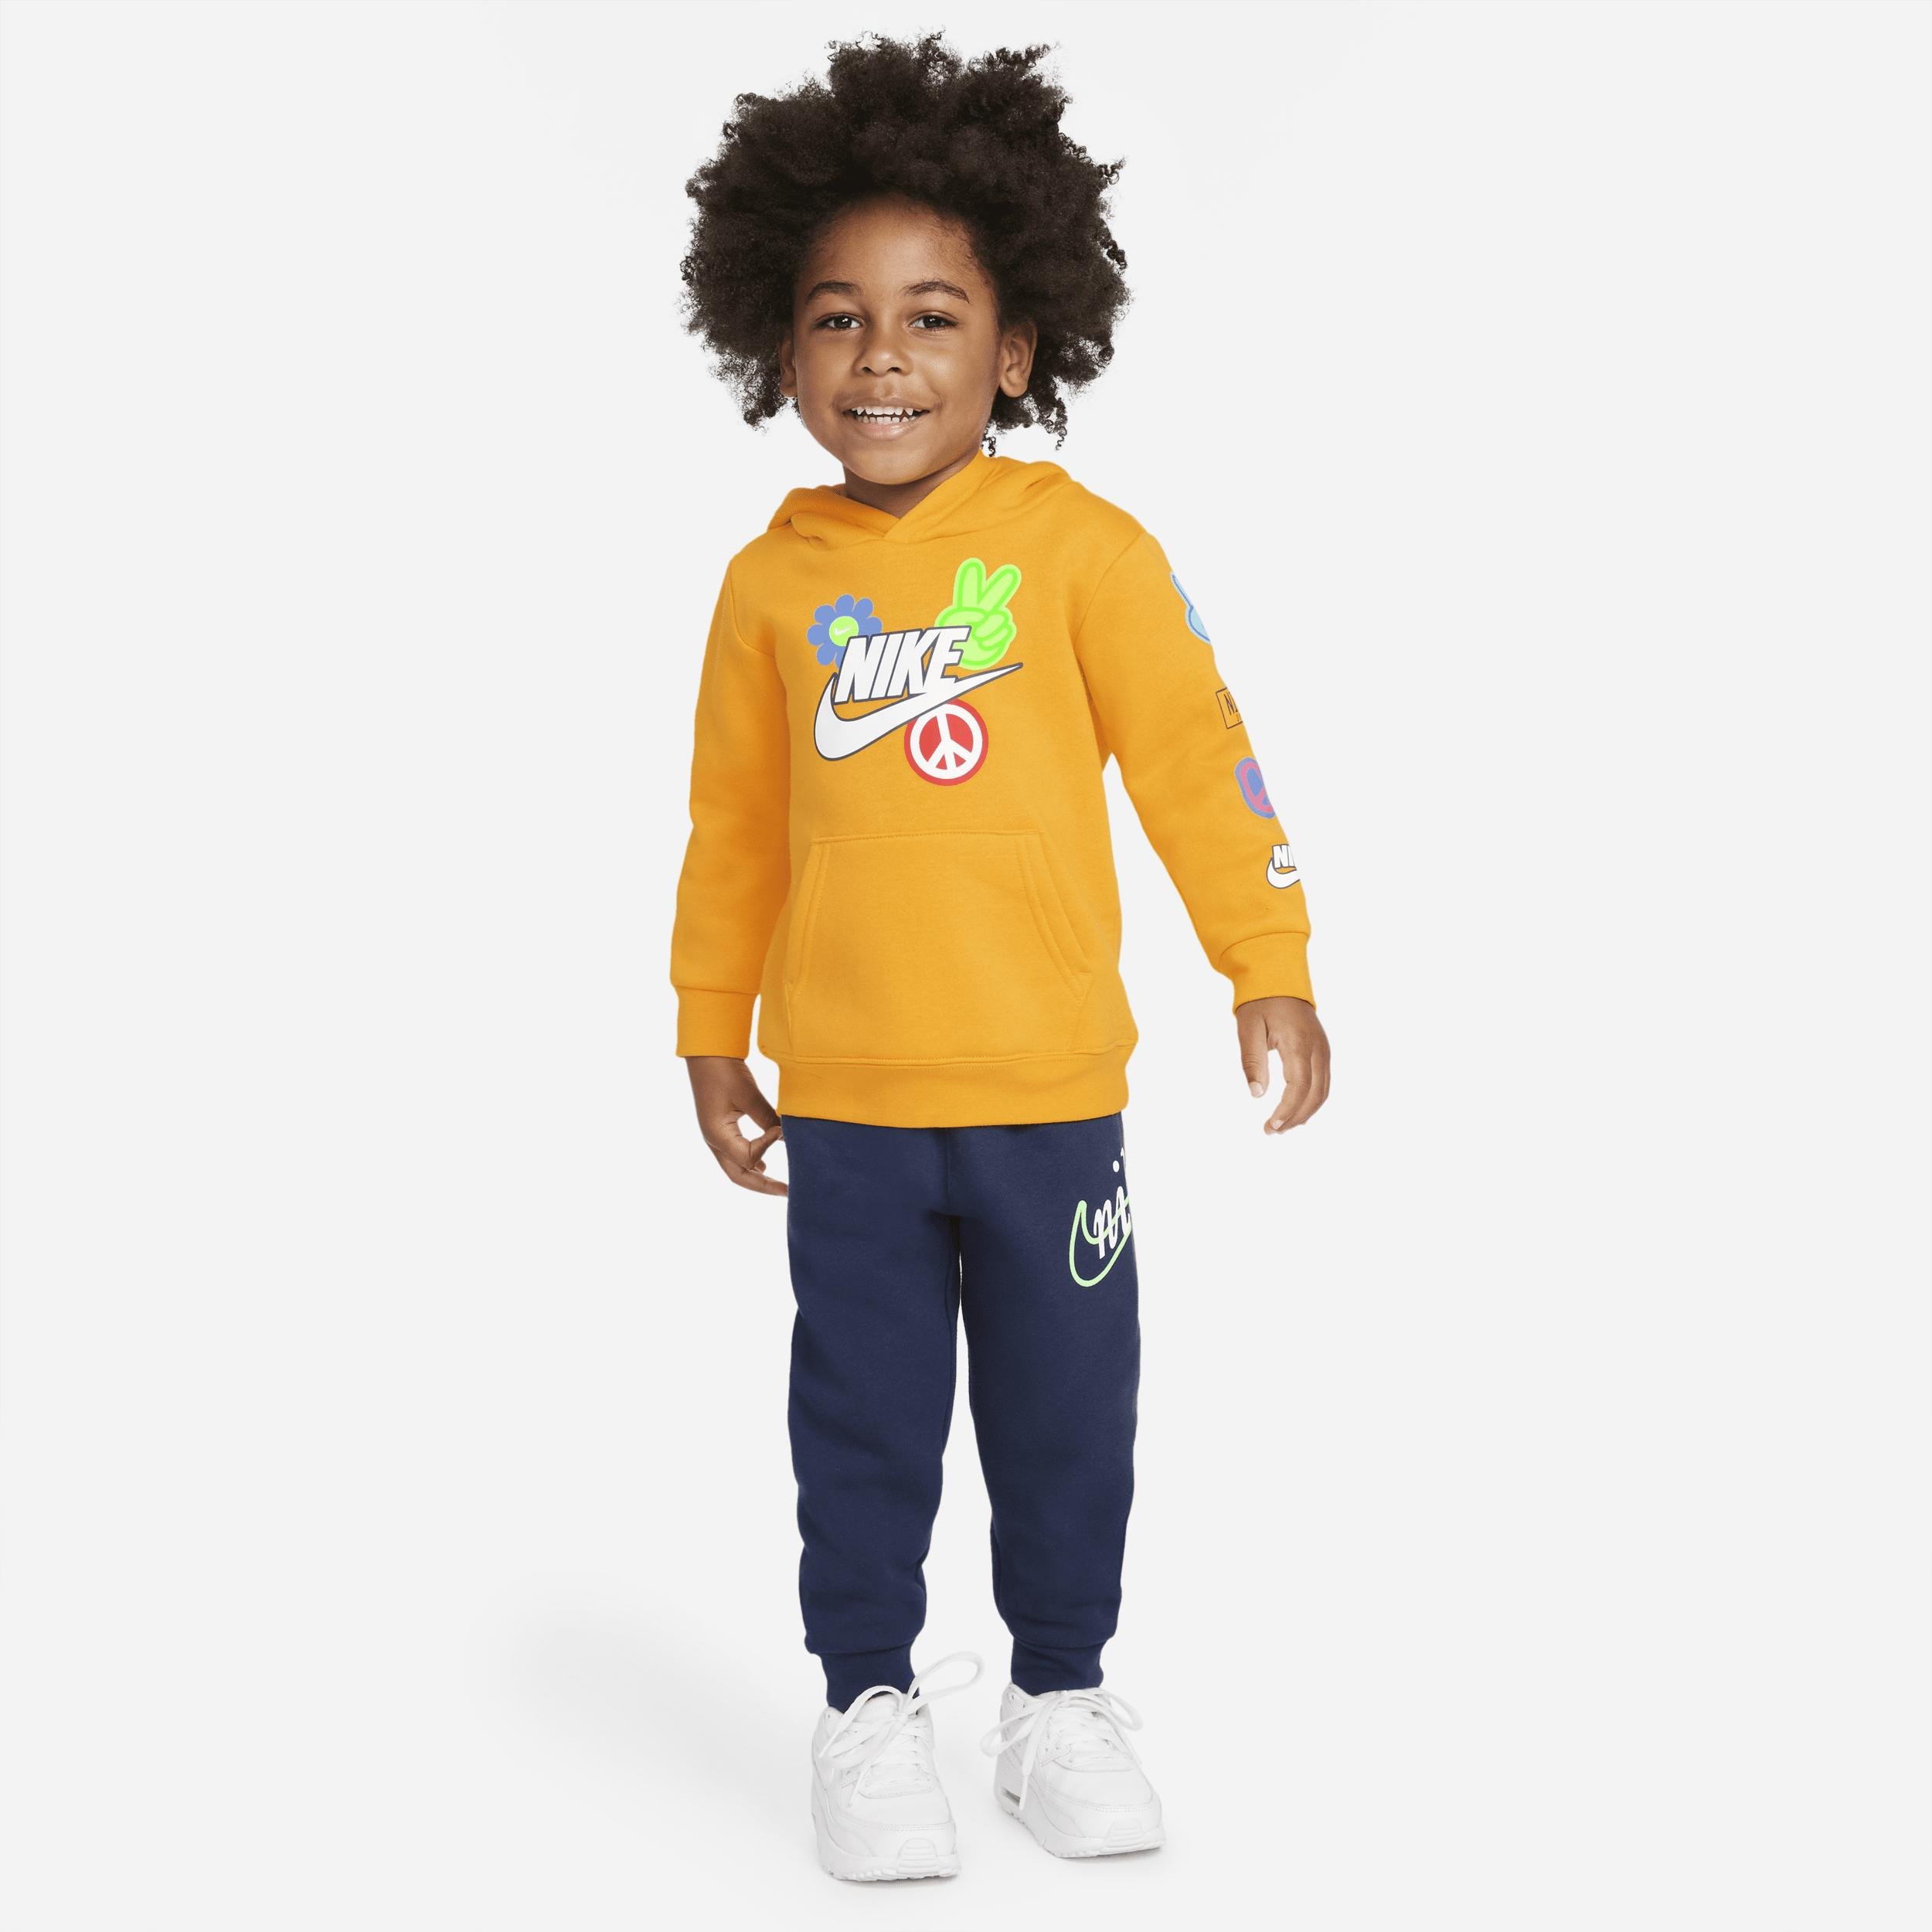 Nike Toddler Hoodie and Pants Set by NIKE